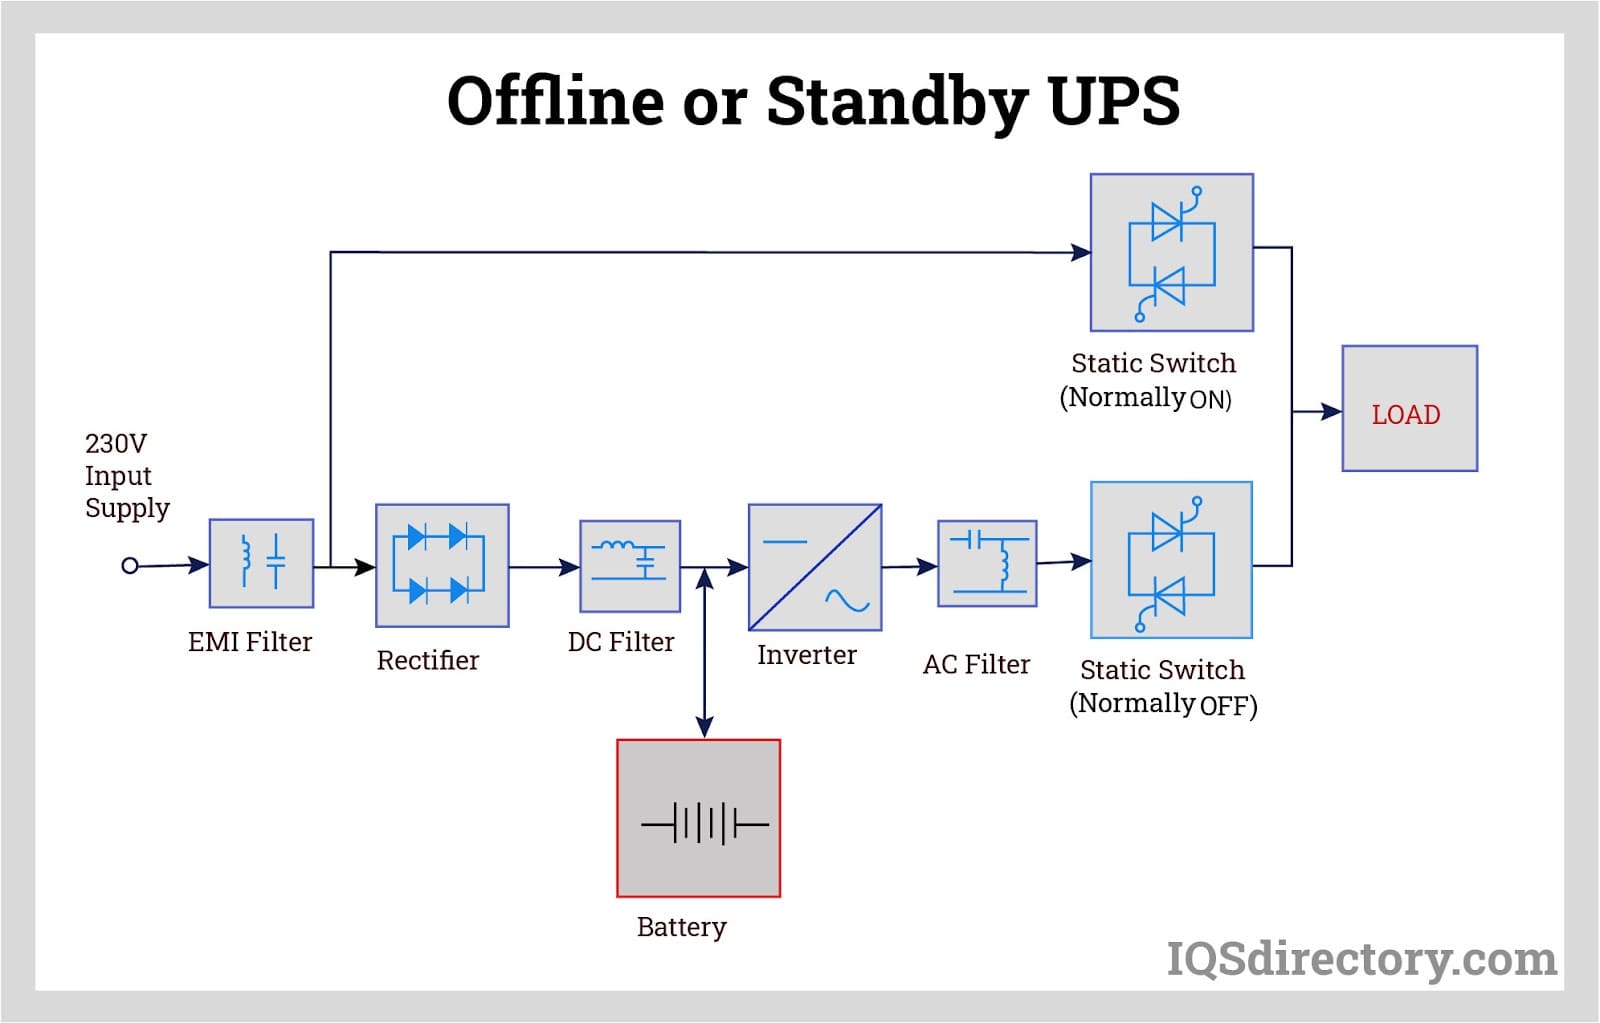 Offline or Standby UPS